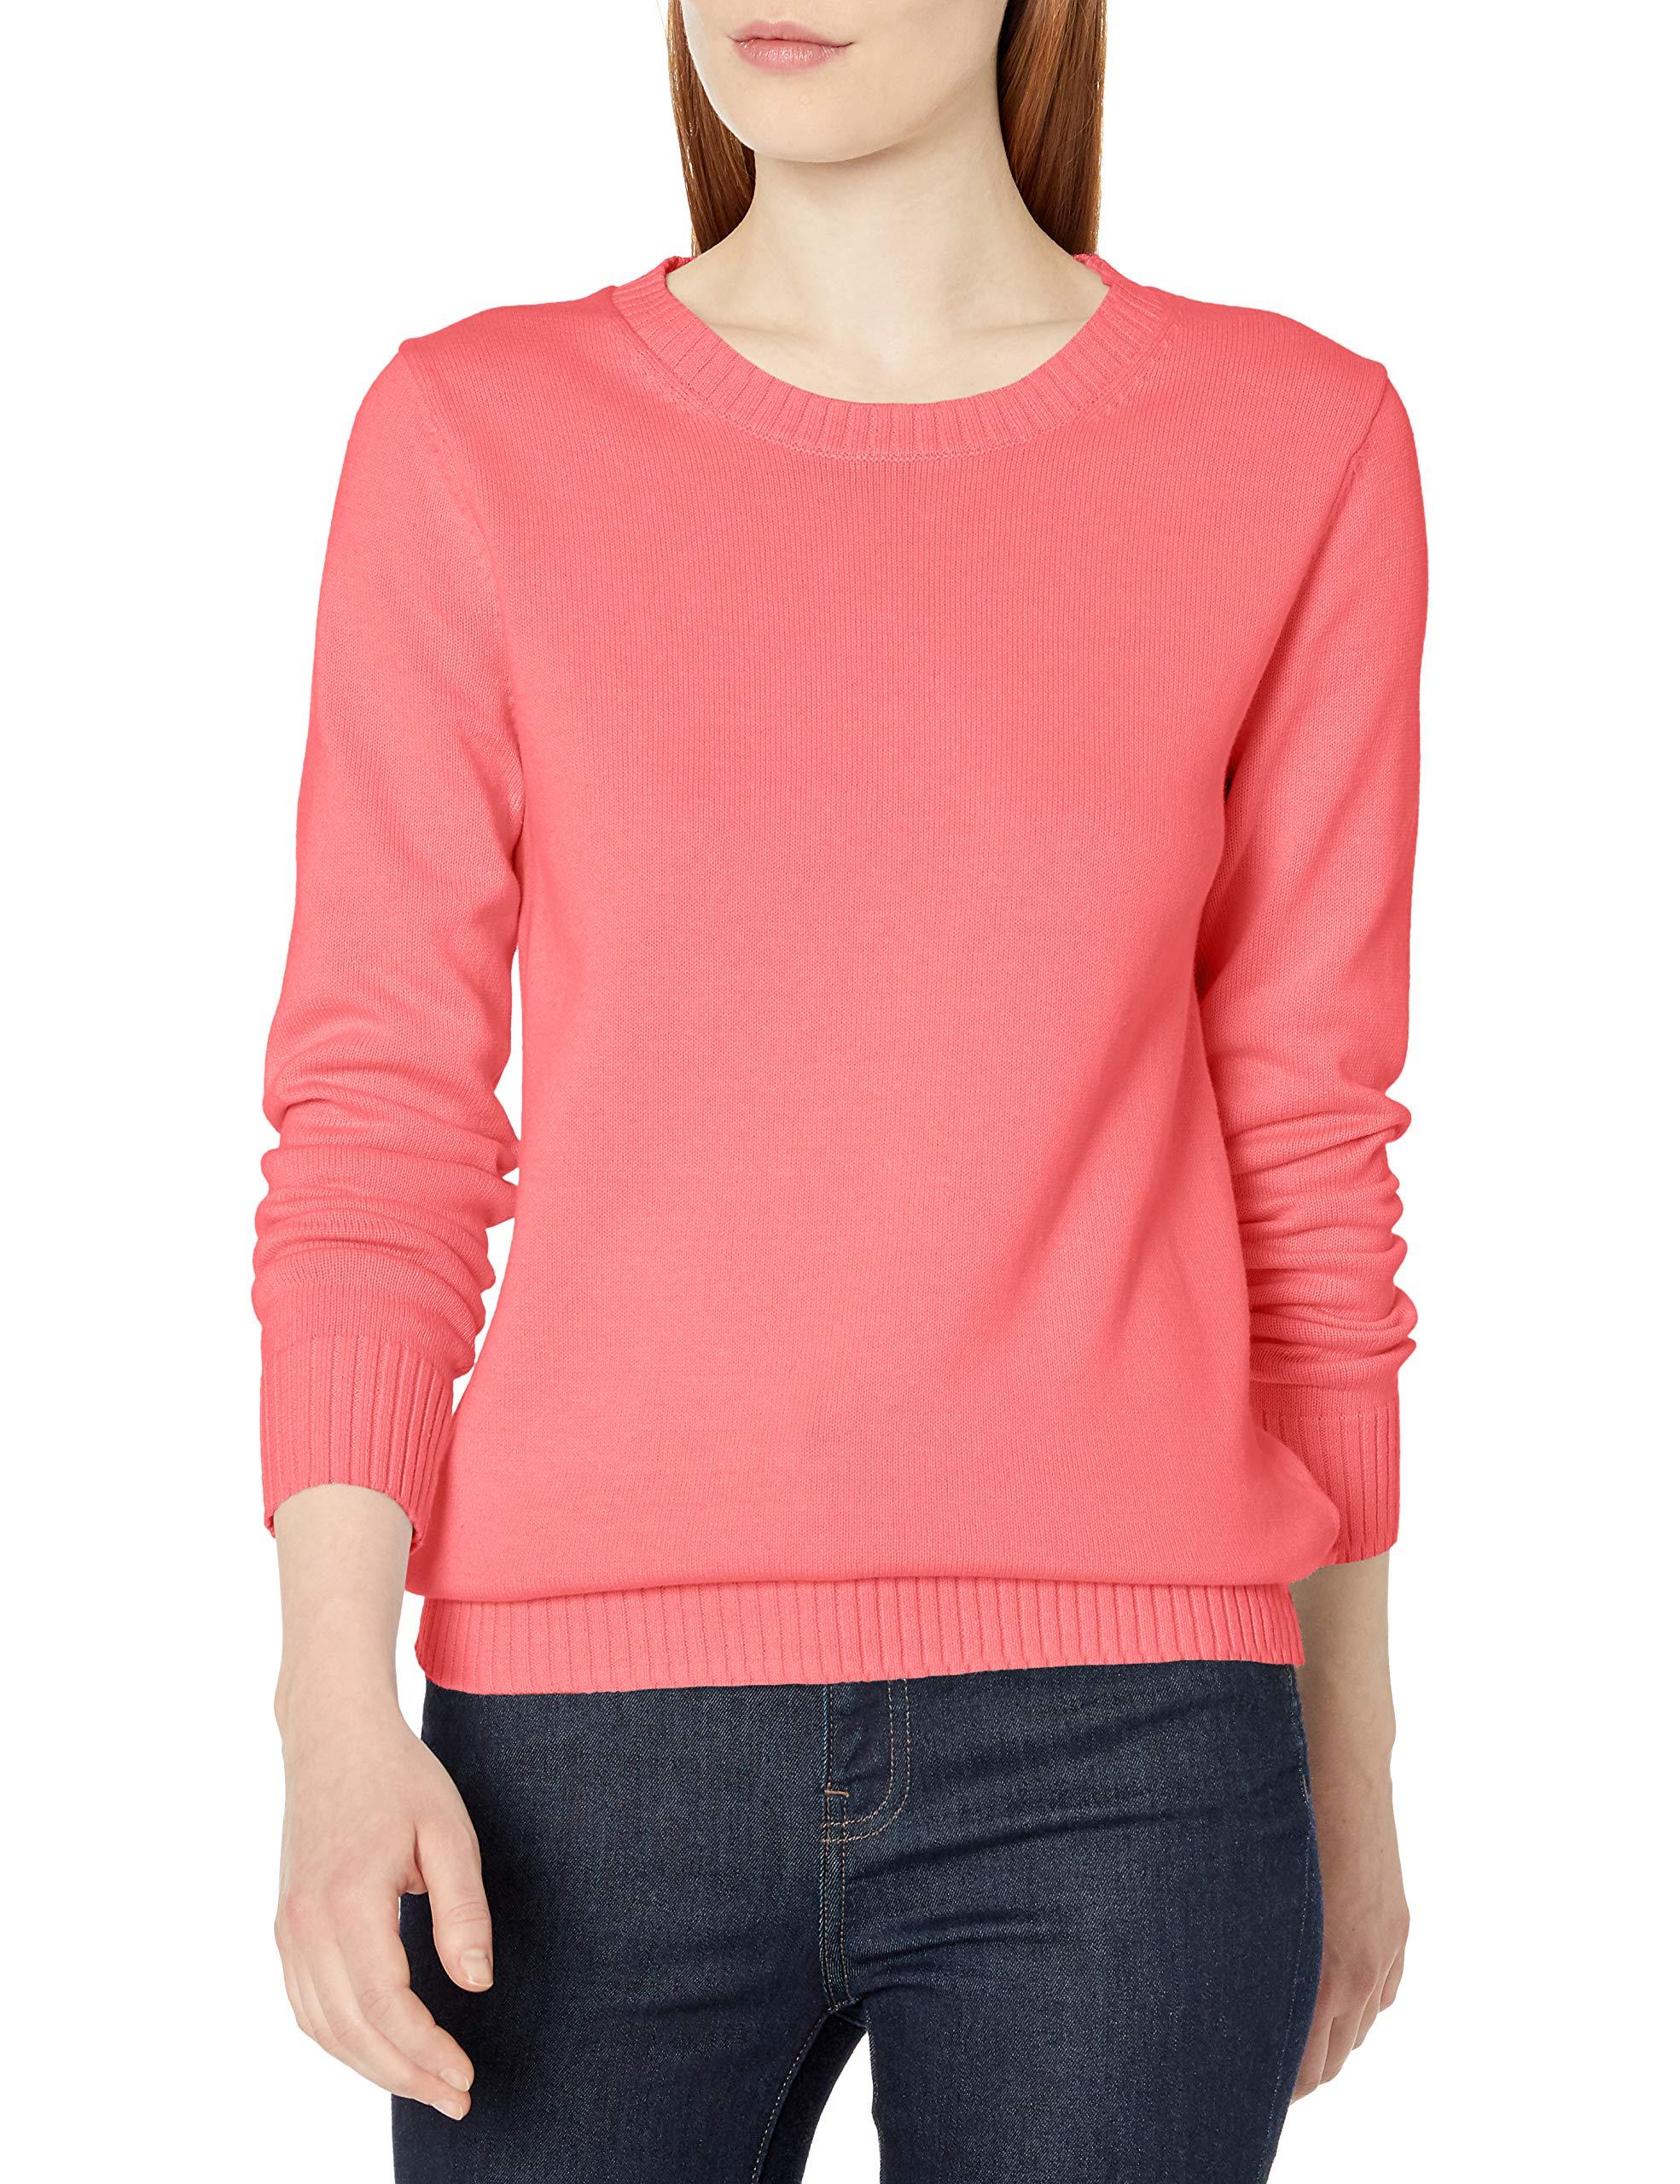 Amazon Essentials 100% Cotton Crewneck Sweater in Coral (Pink) - Lyst